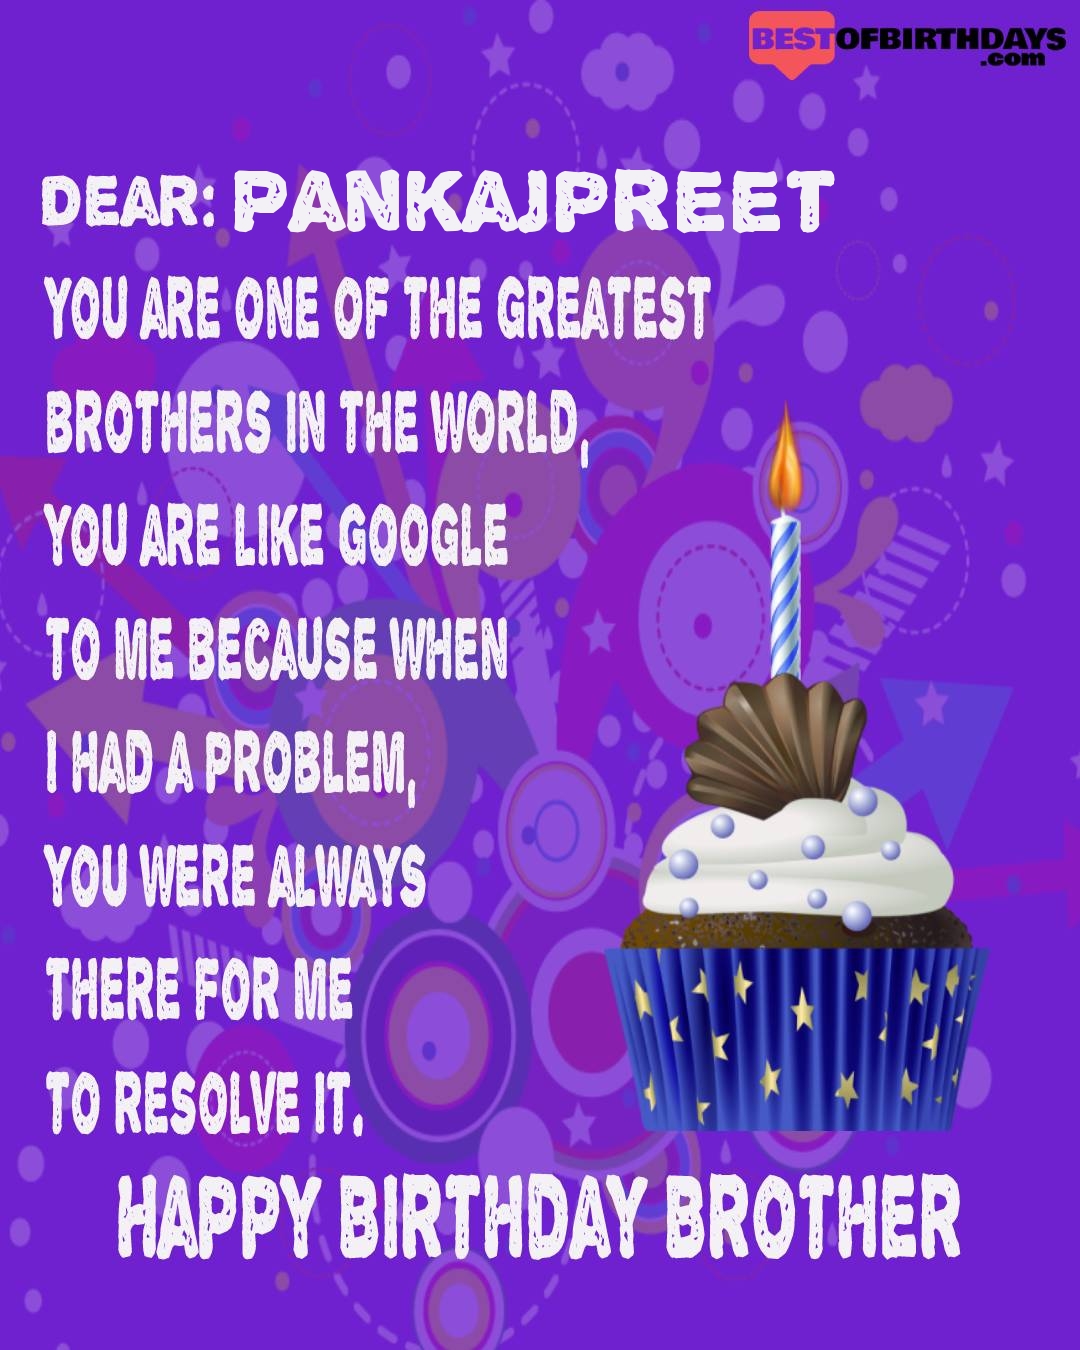 Happy birthday pankajpreet bhai brother bro